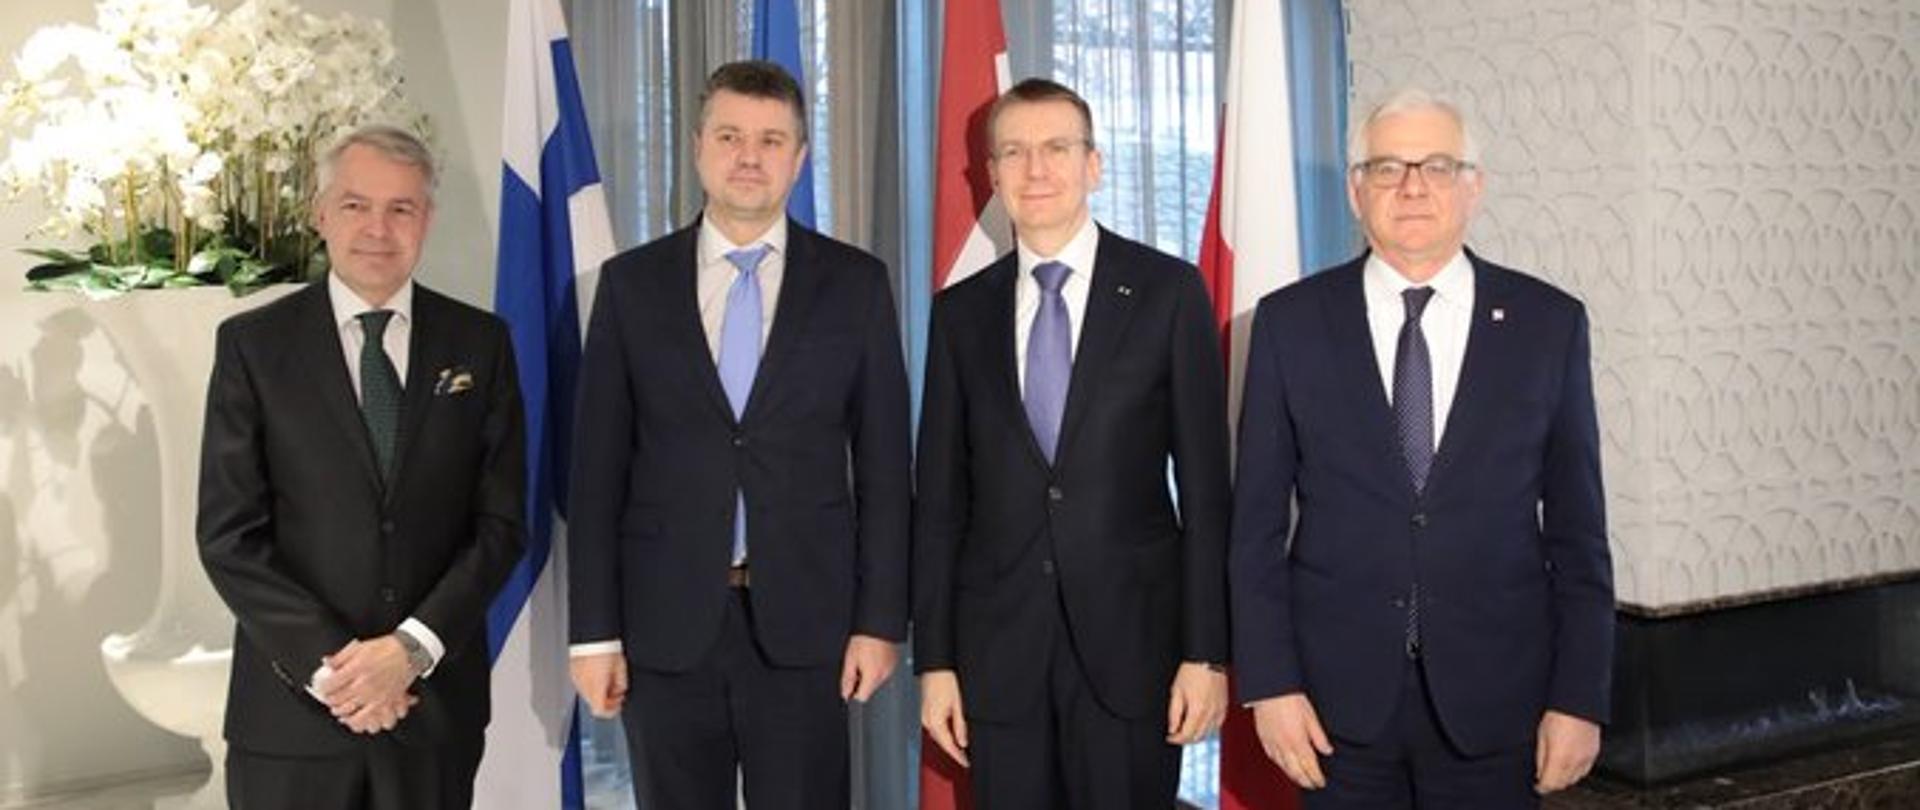 Minister Jacek Czaputowicz visits Republic of Estonia